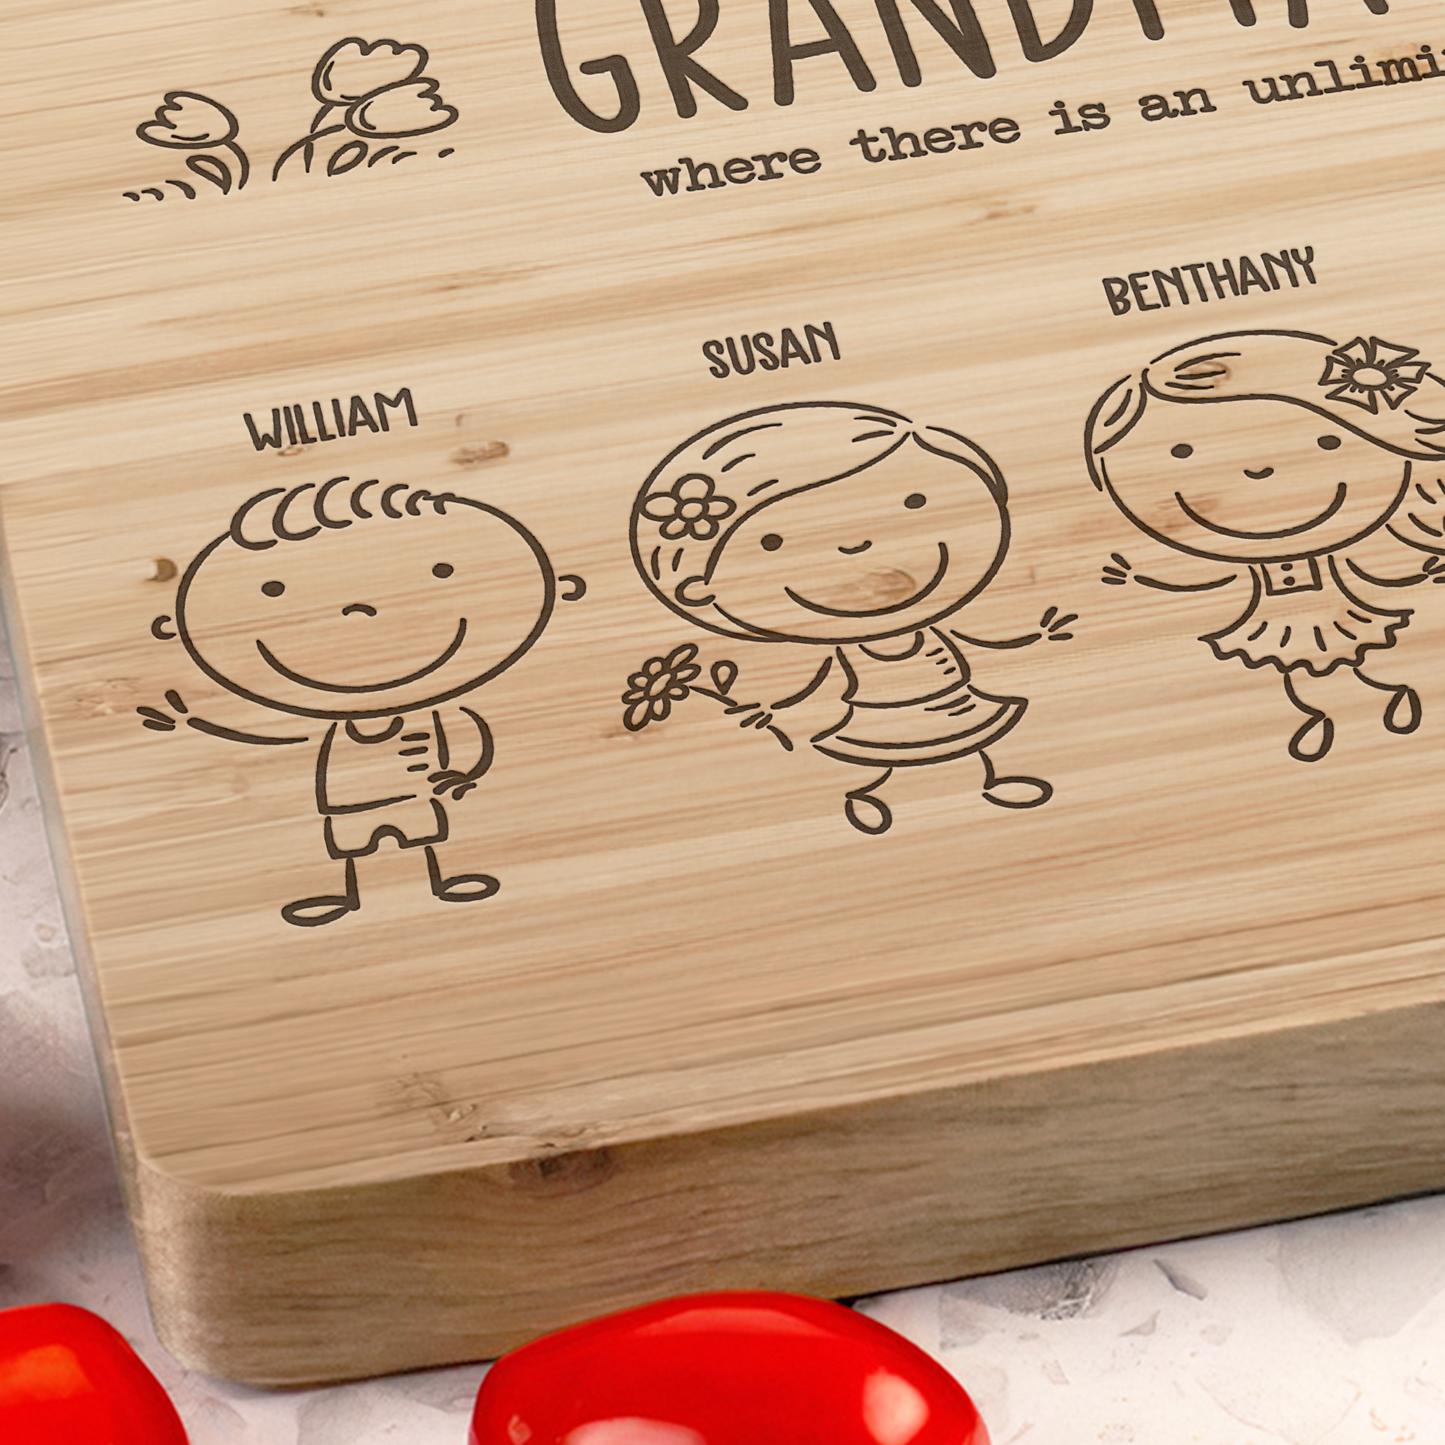 Grandma's Kitchen - Personalized Cutting Board